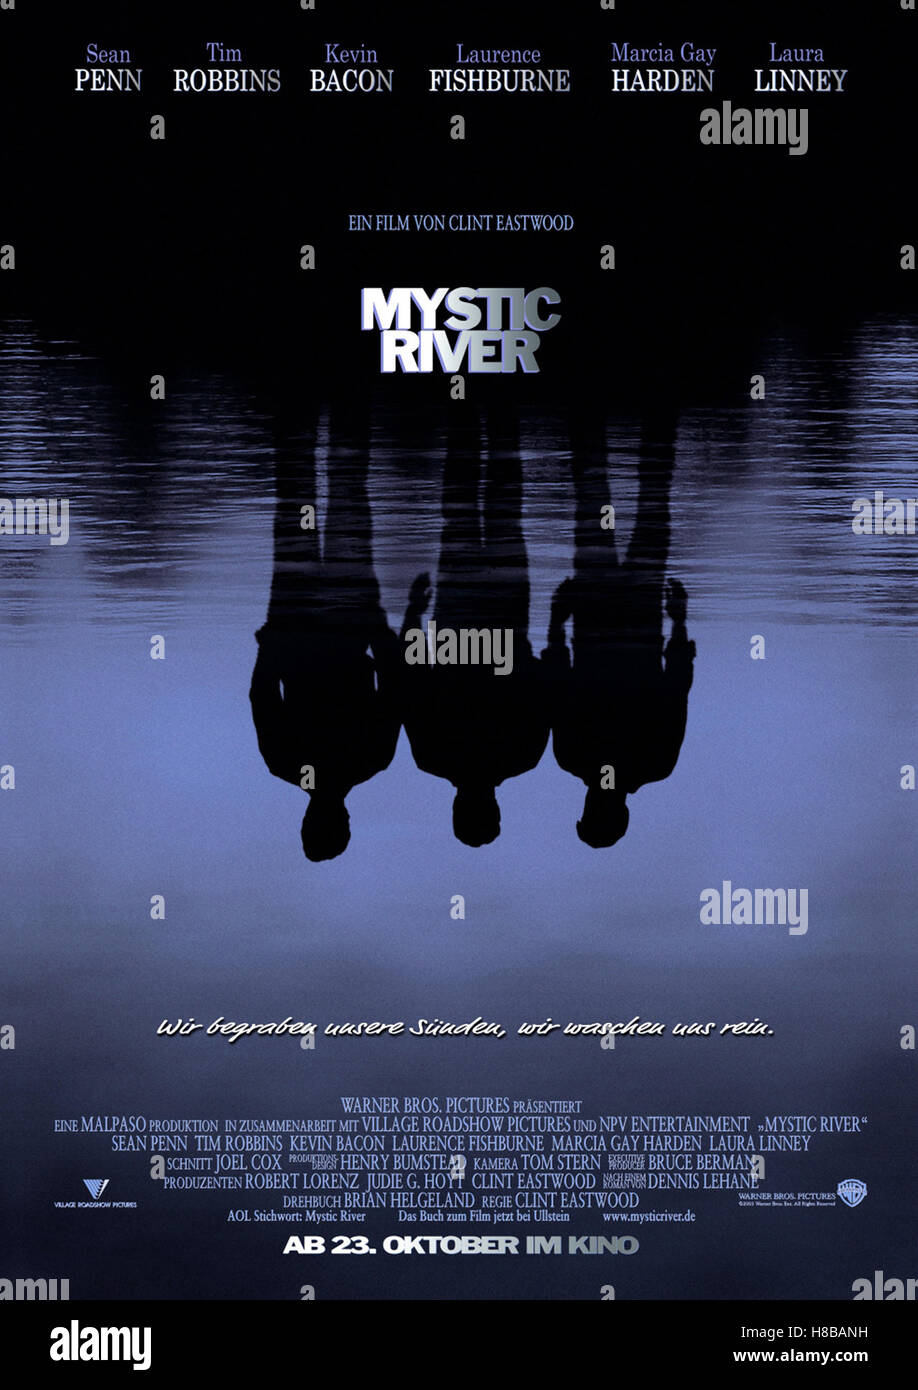 Mystic River, (MYSTIC RIVER) USA 2003, Regie: Clint Eastwood, Key: Plakat, Stock Photo